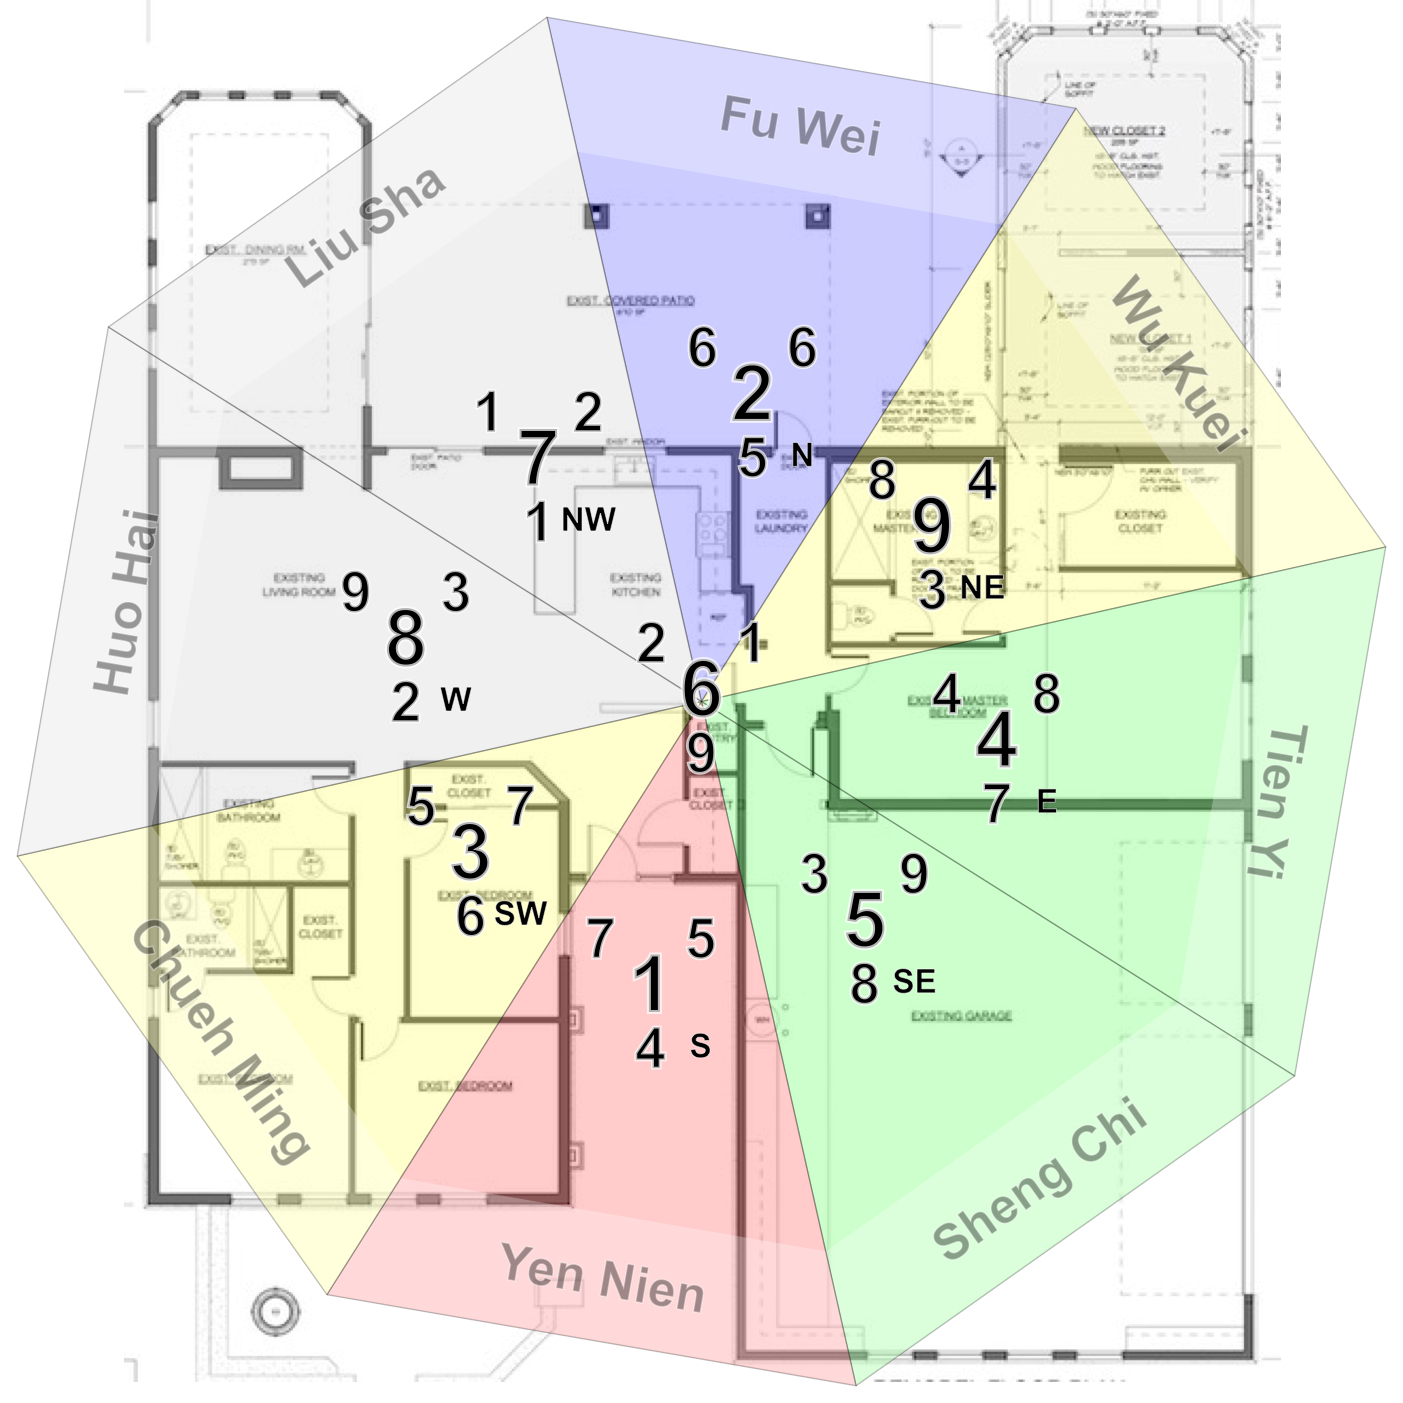 Feng Shui House Layout Diagram